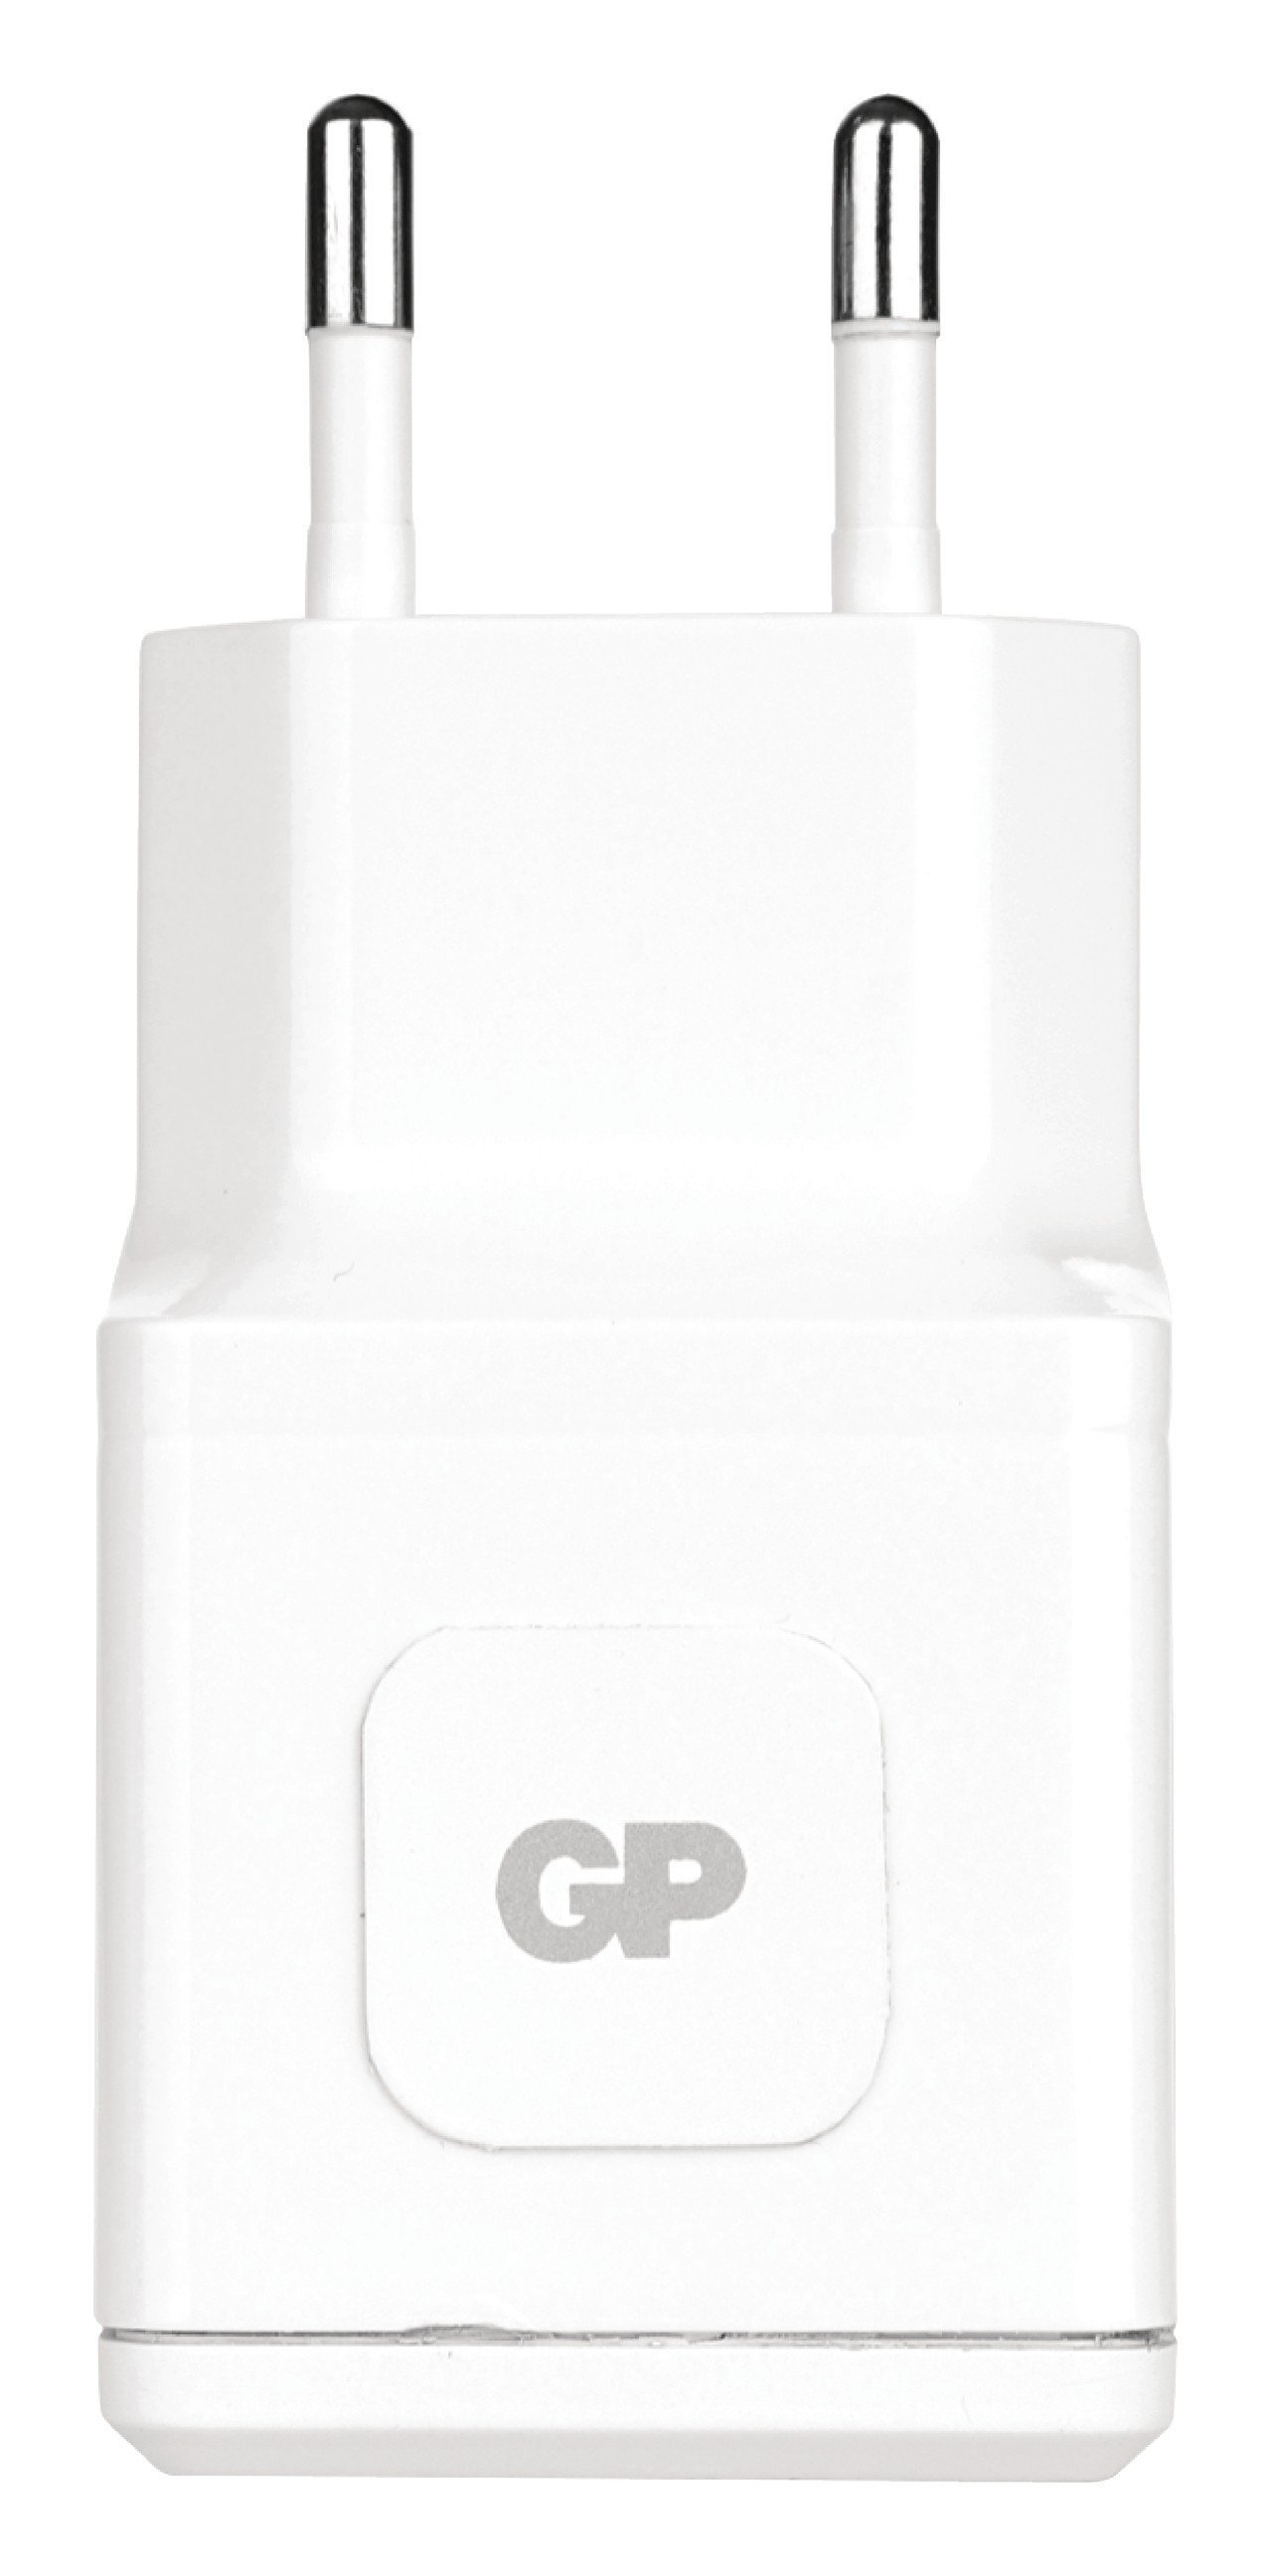 Сетевой адаптер питания GP USB Wall charger 5V 2.4A 12W WA21- фото3